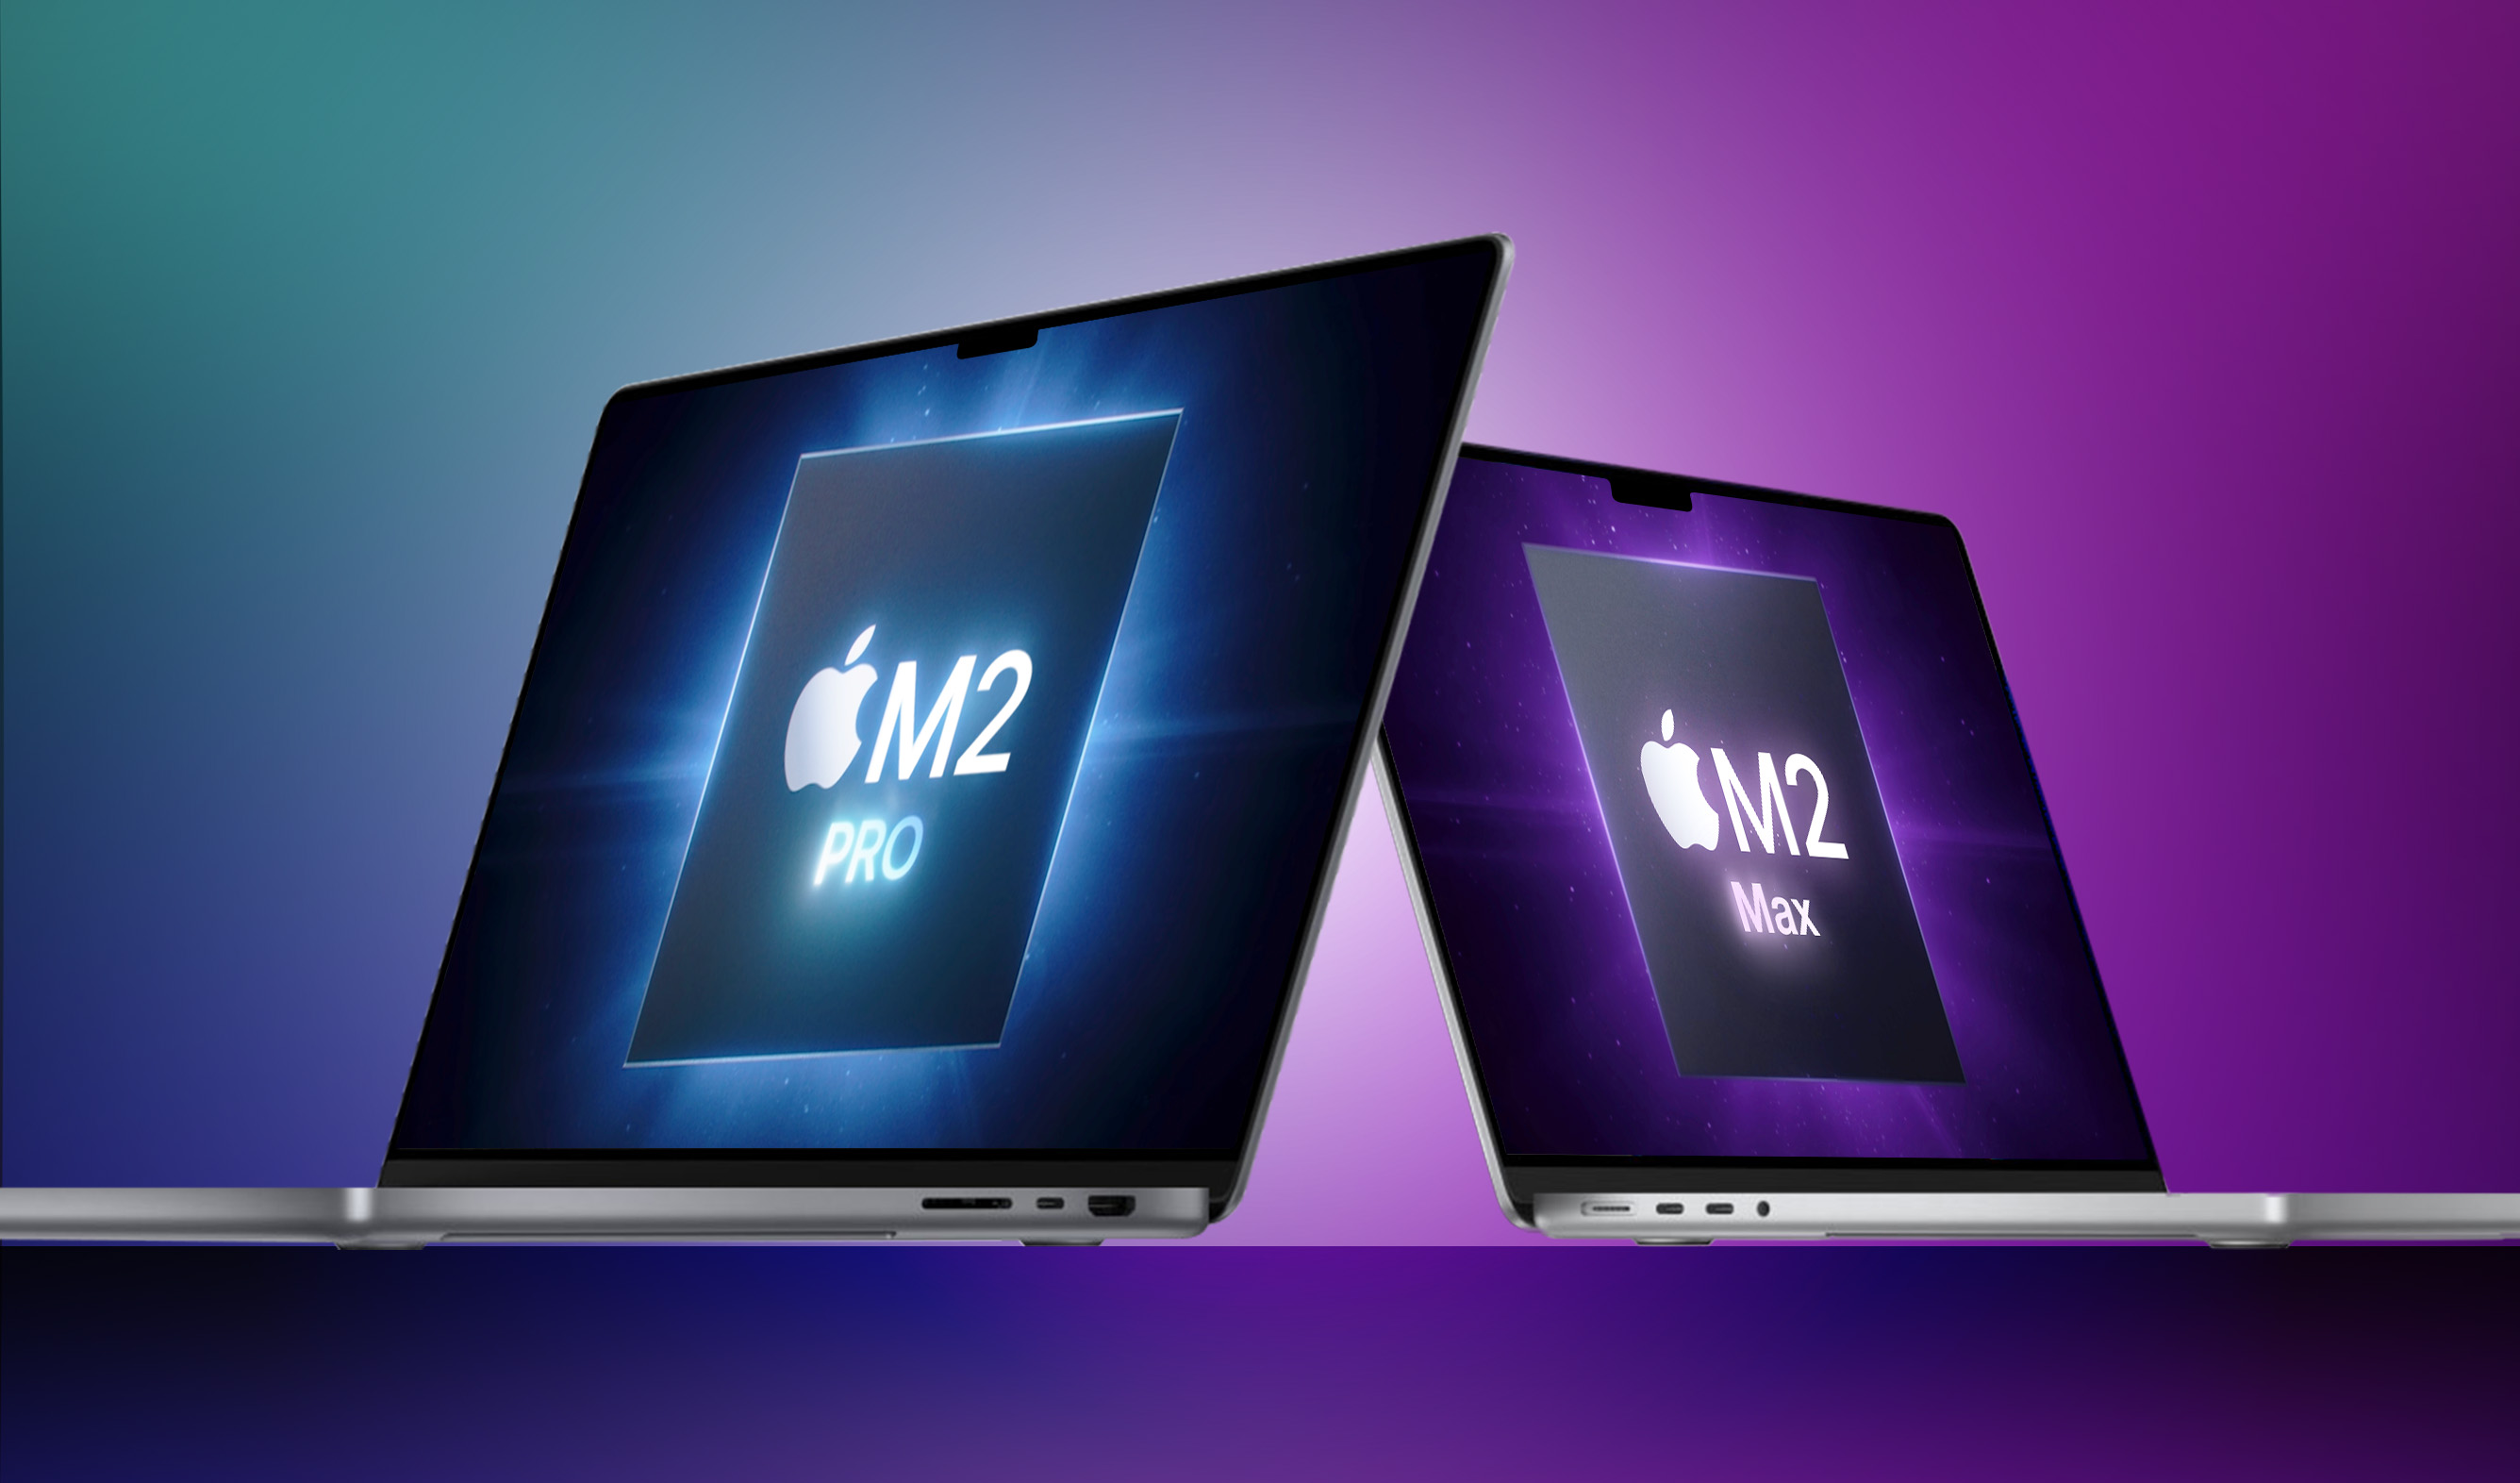 Next-Generation MacBook Pros Rumored to Feature ‘Very High-Bandwidth’ RAM